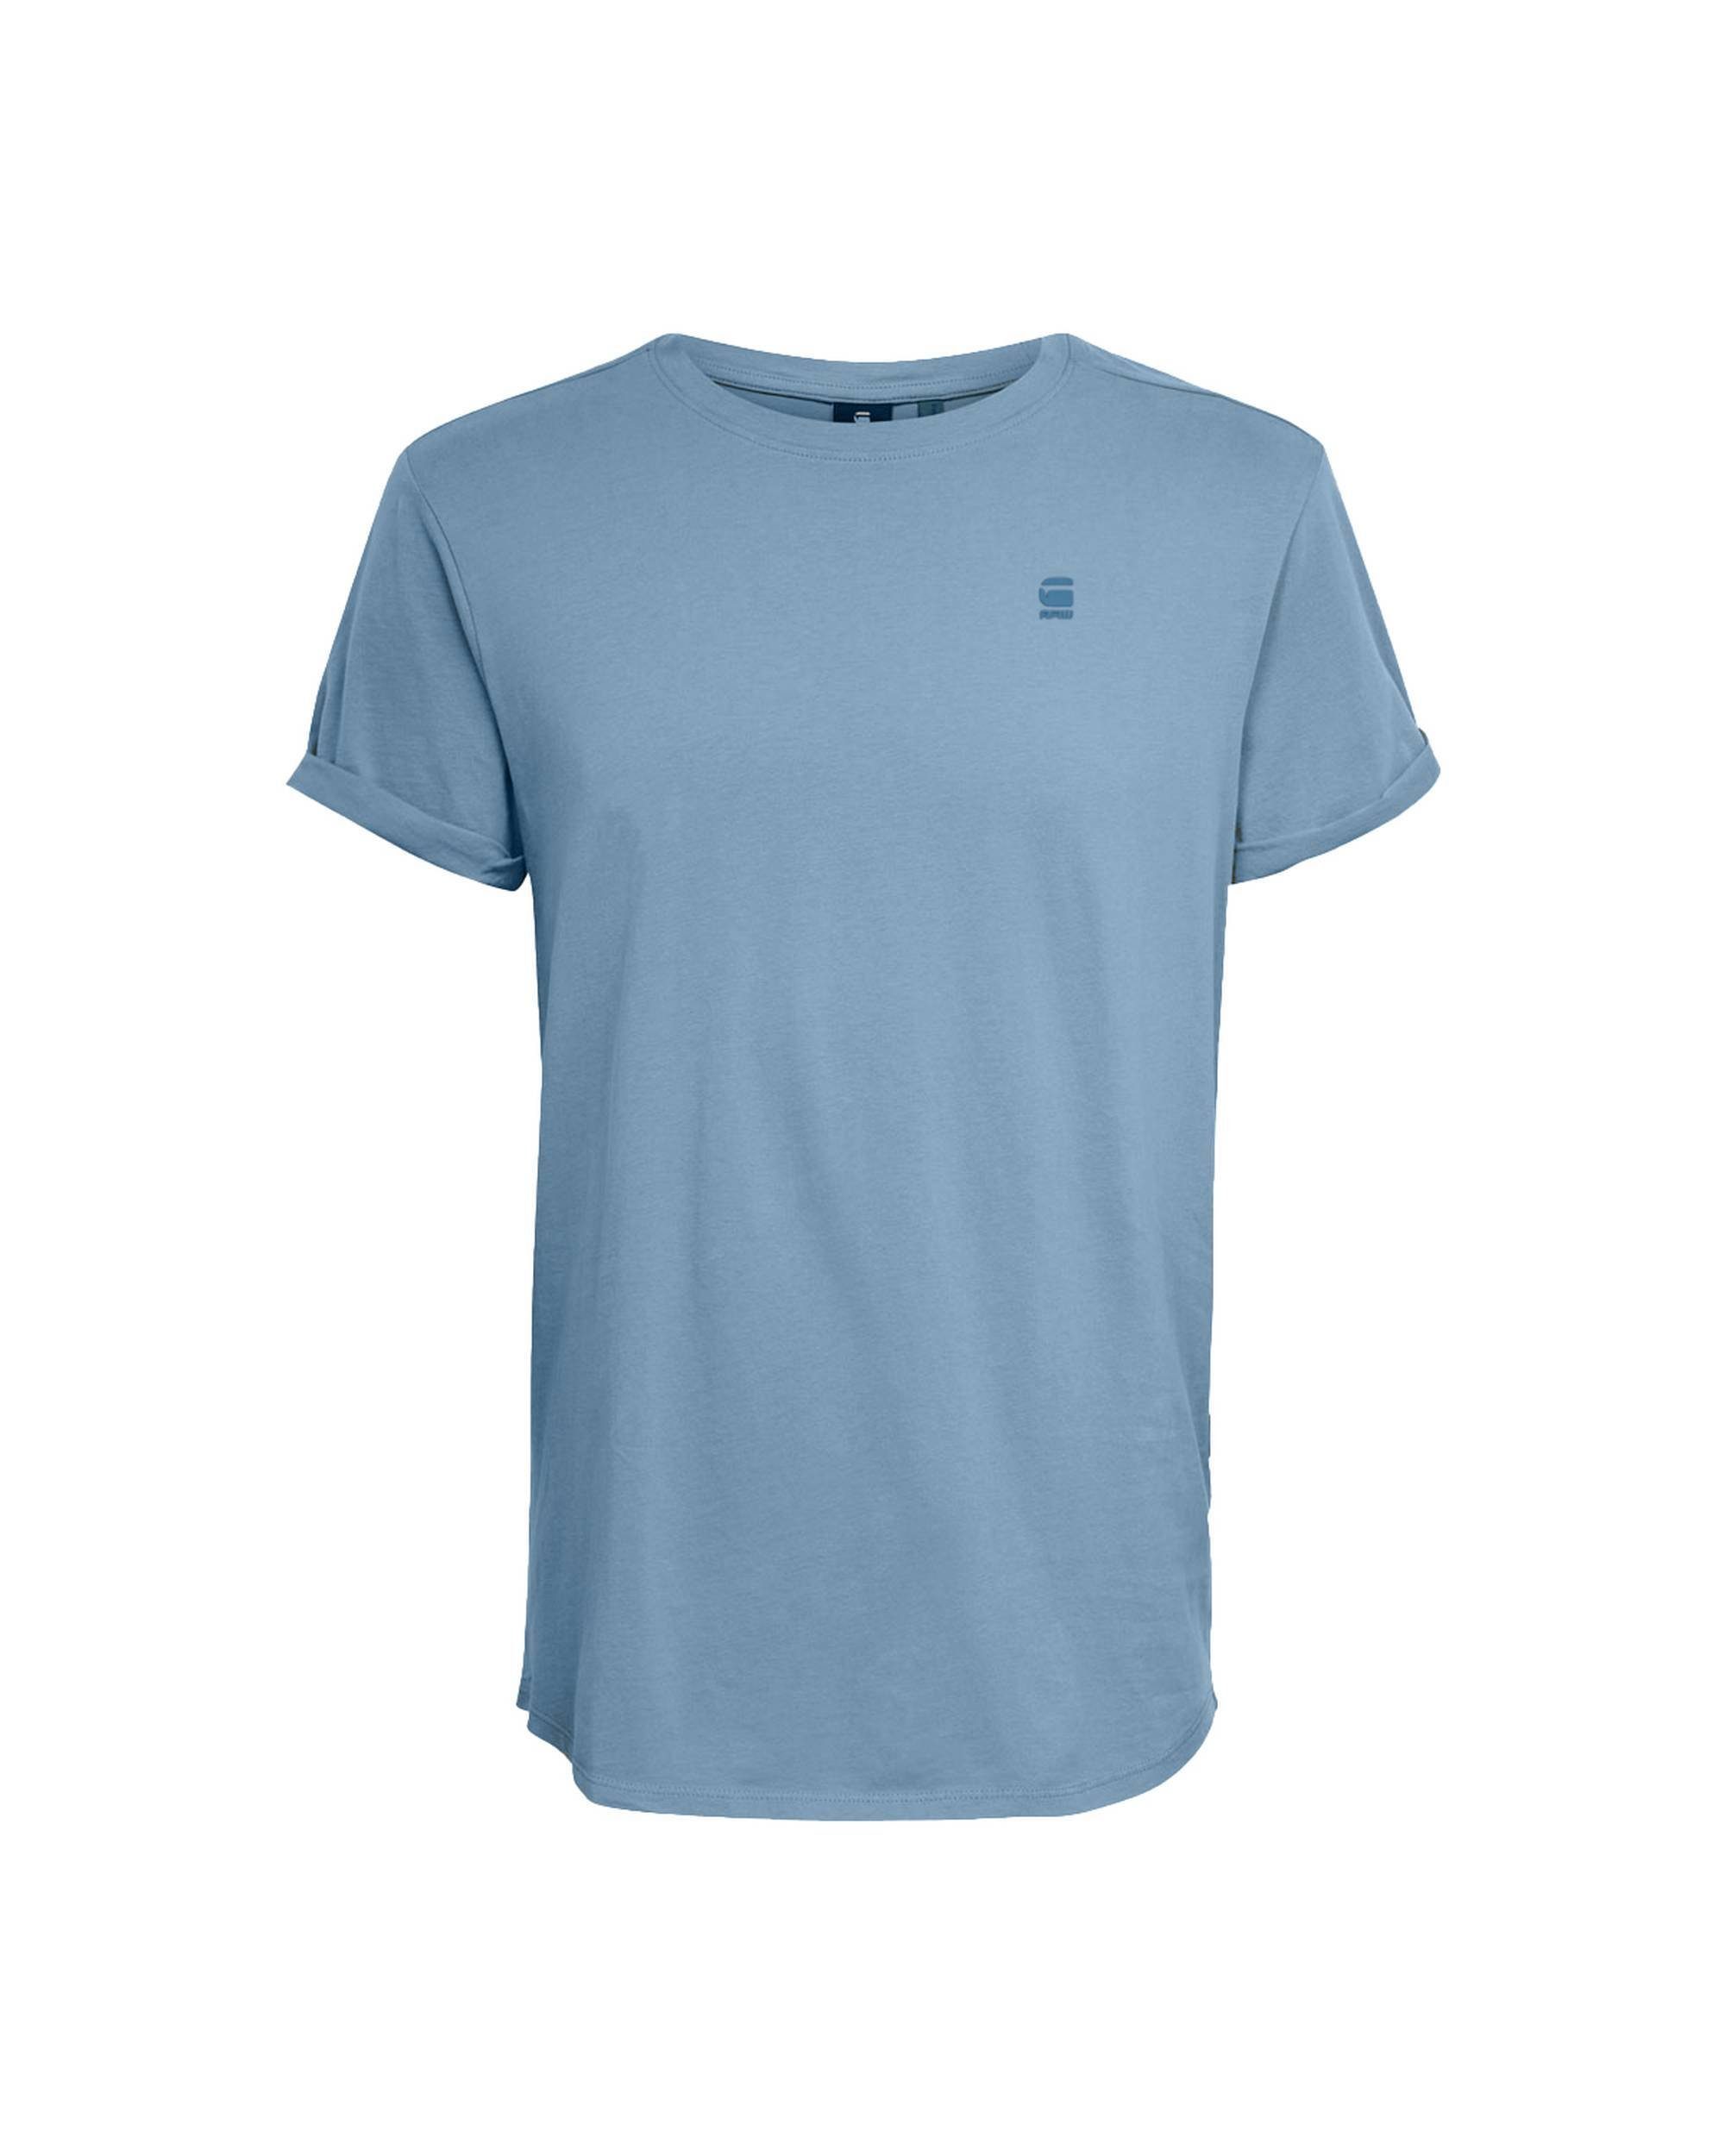 T-Shirt Herren Cotton Rundhals, T-Shirt G-Star Hellblau - Lash, RAW Organic